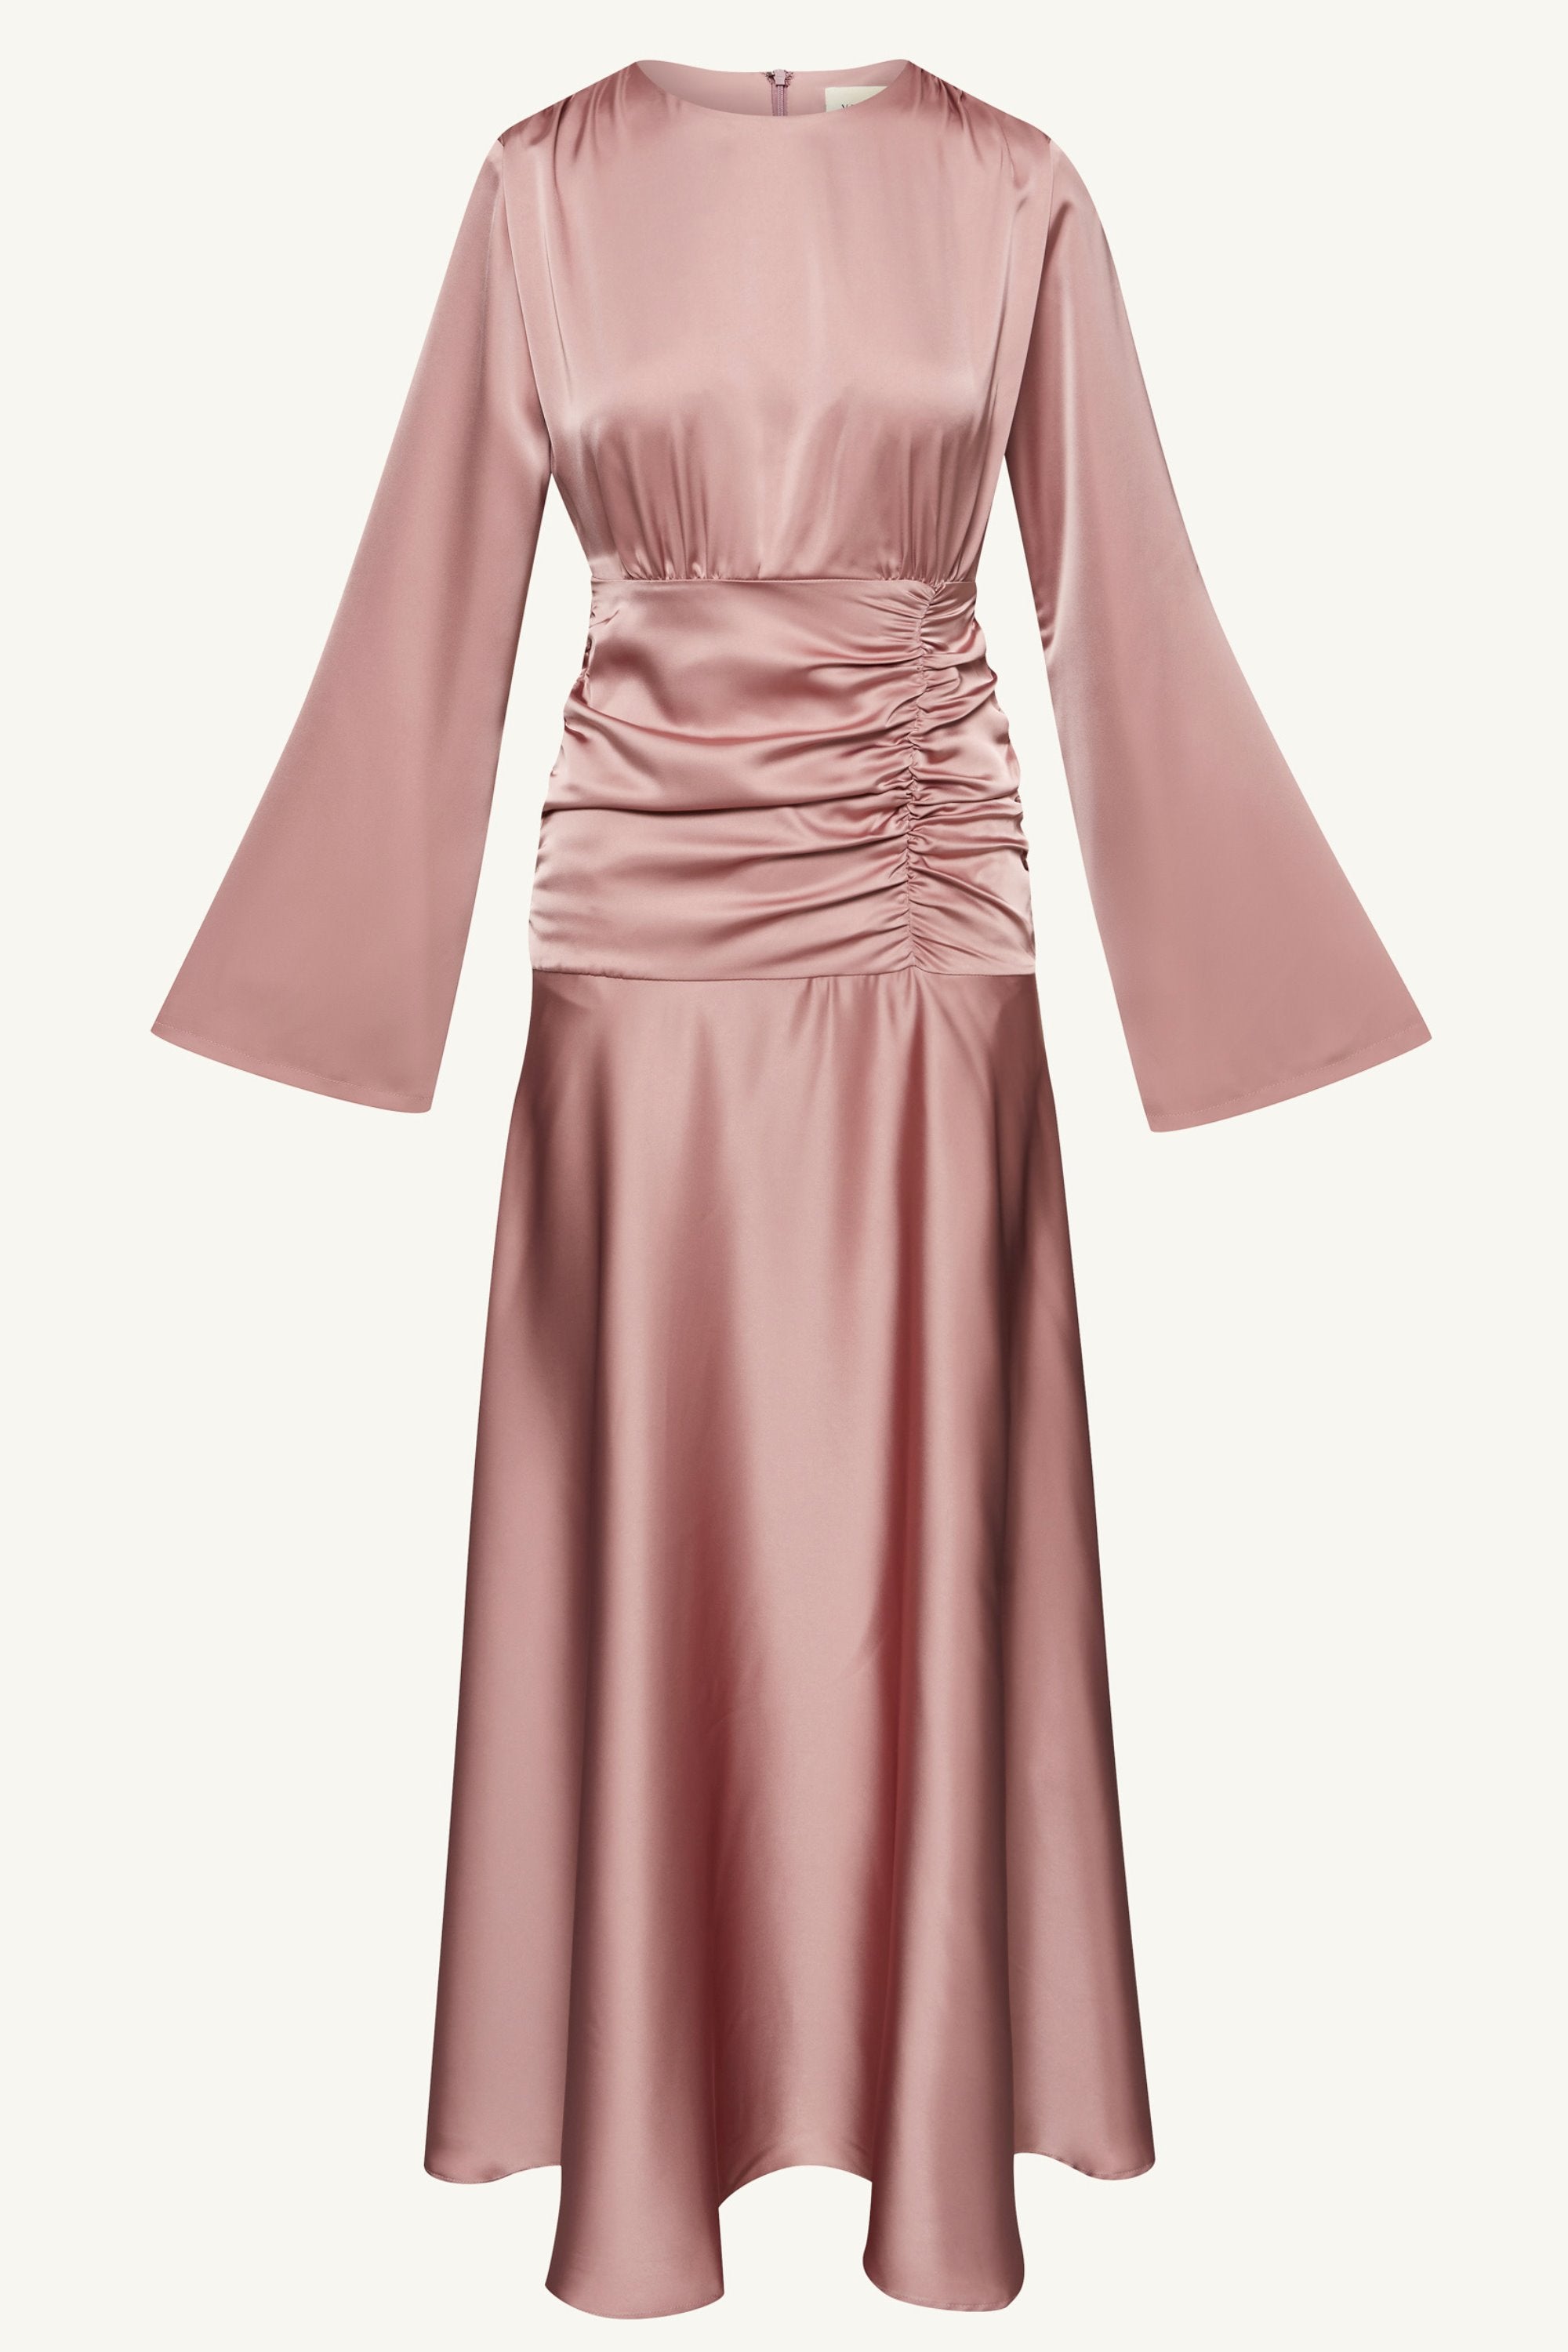 Shams Satin Side Rouched Maxi Dress - Dusty Rose Clothing Veiled 